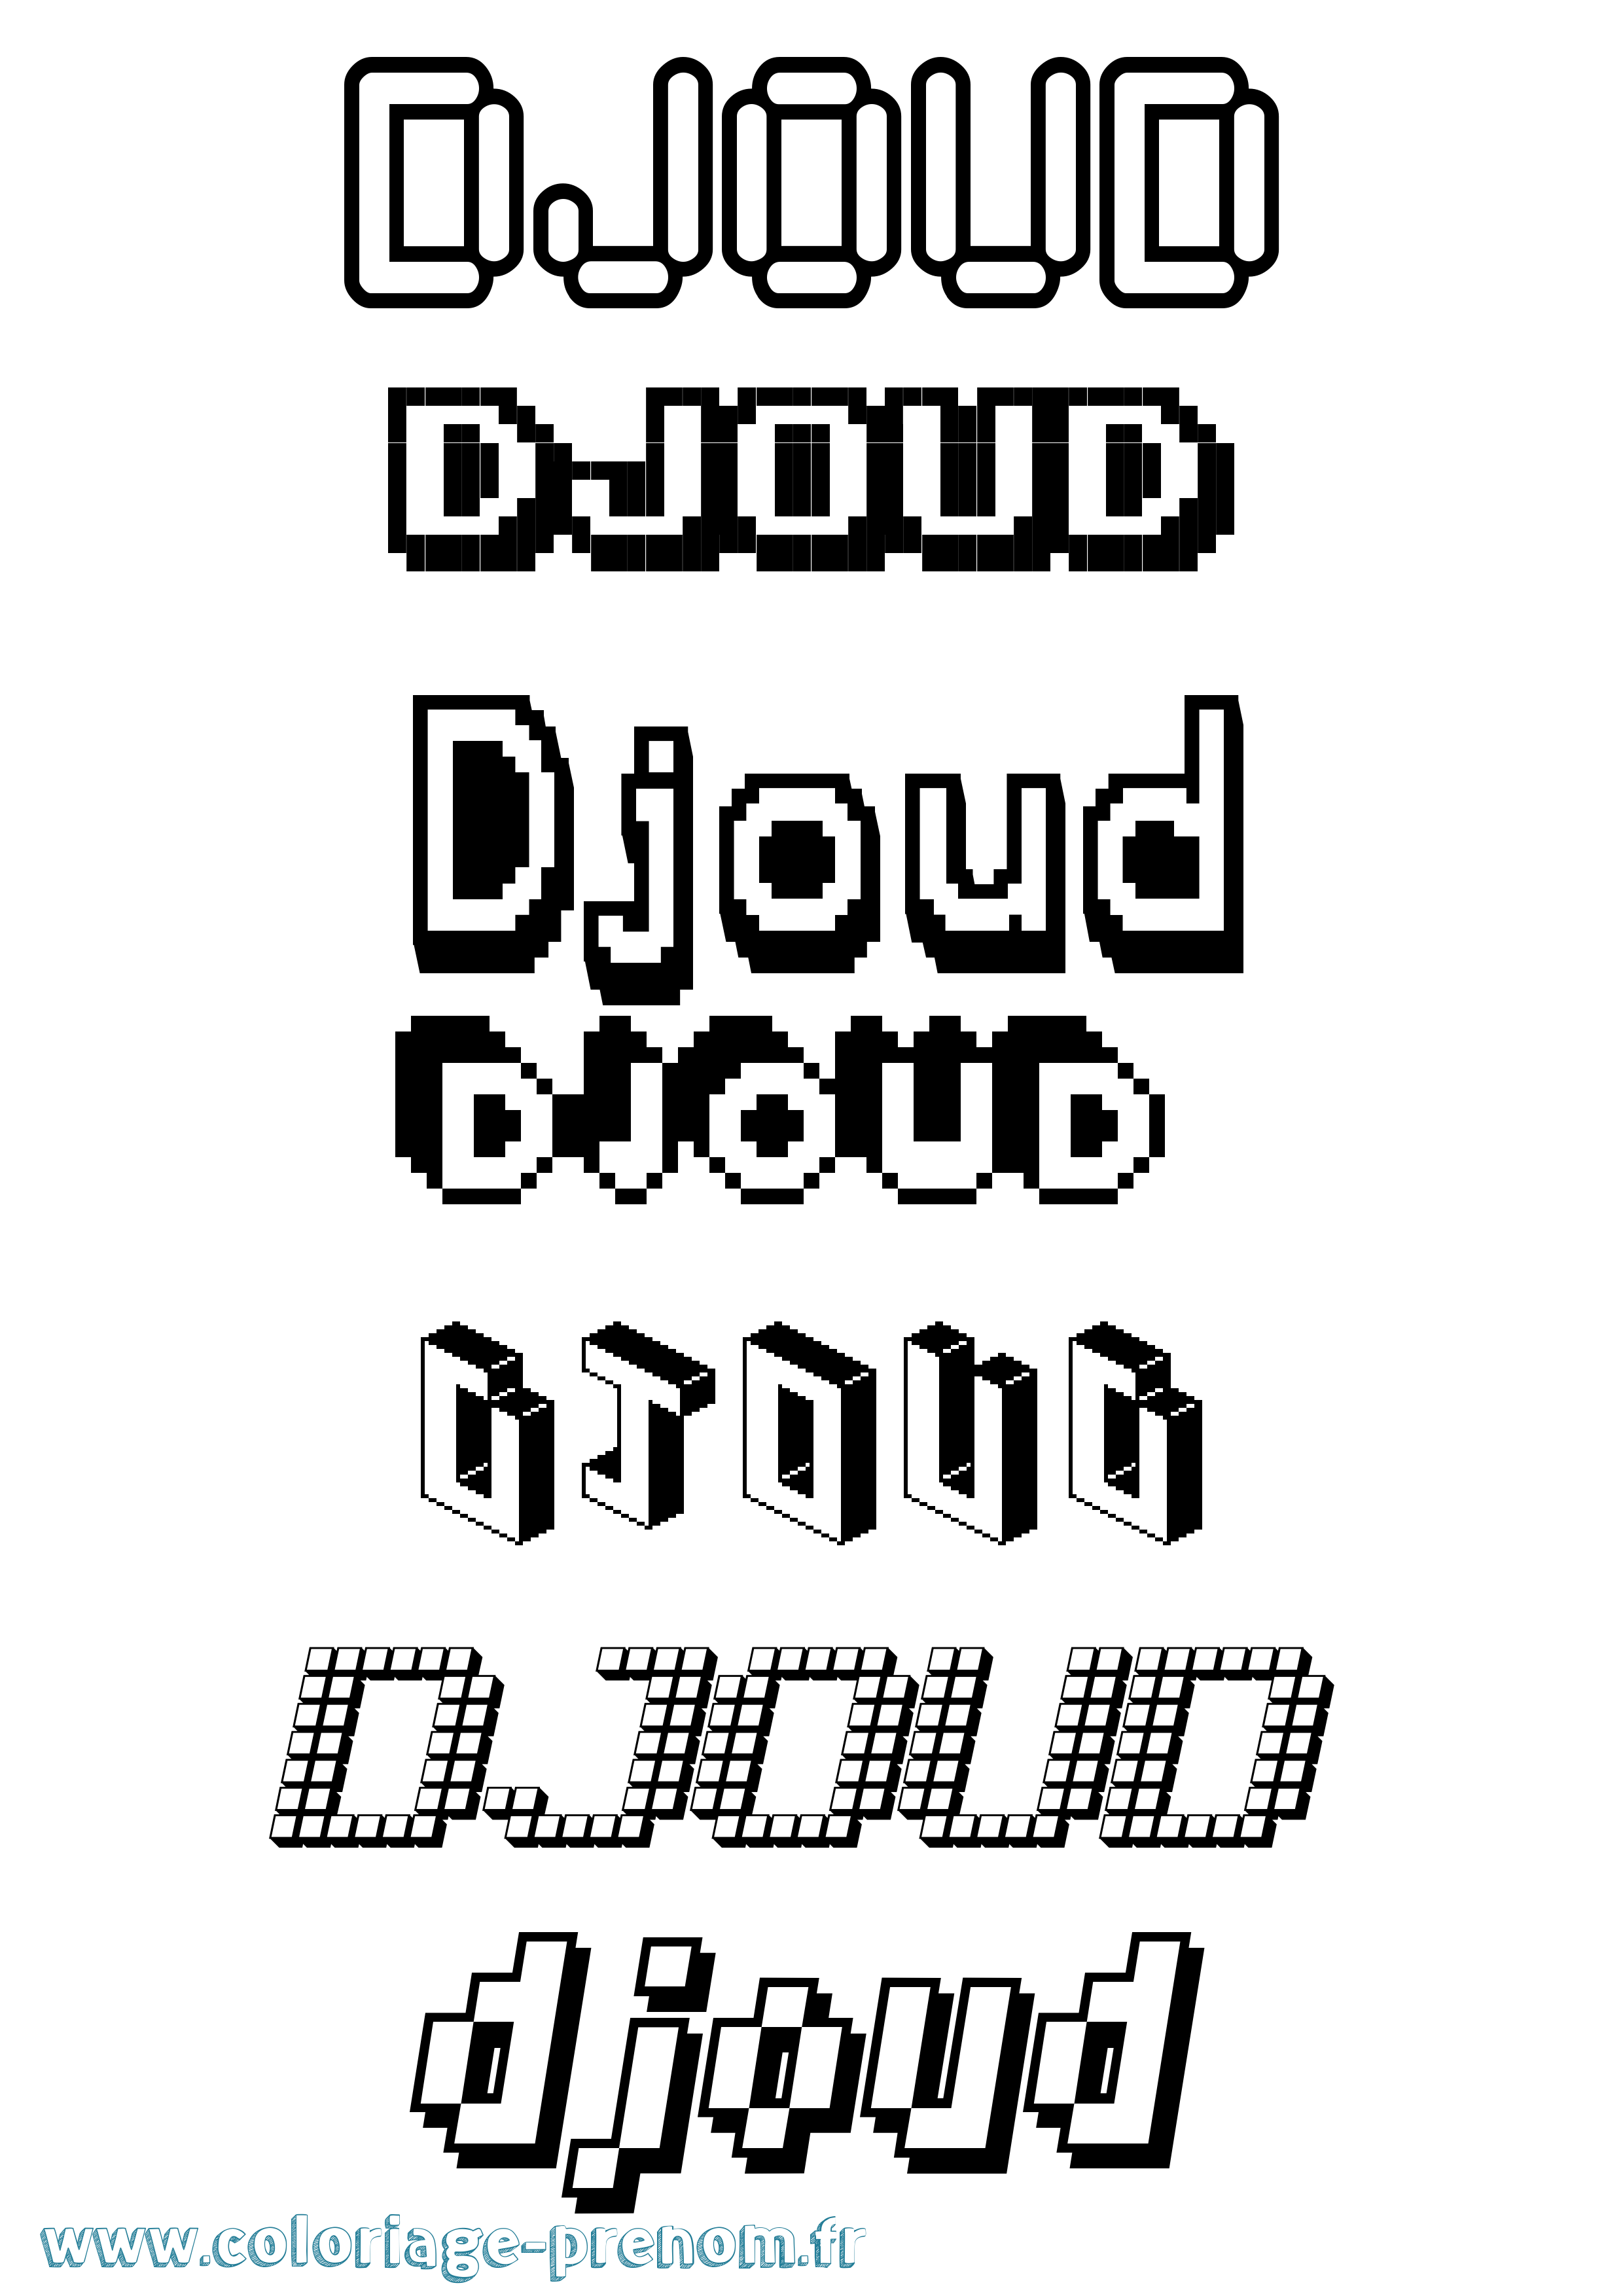 Coloriage prénom Djoud Pixel